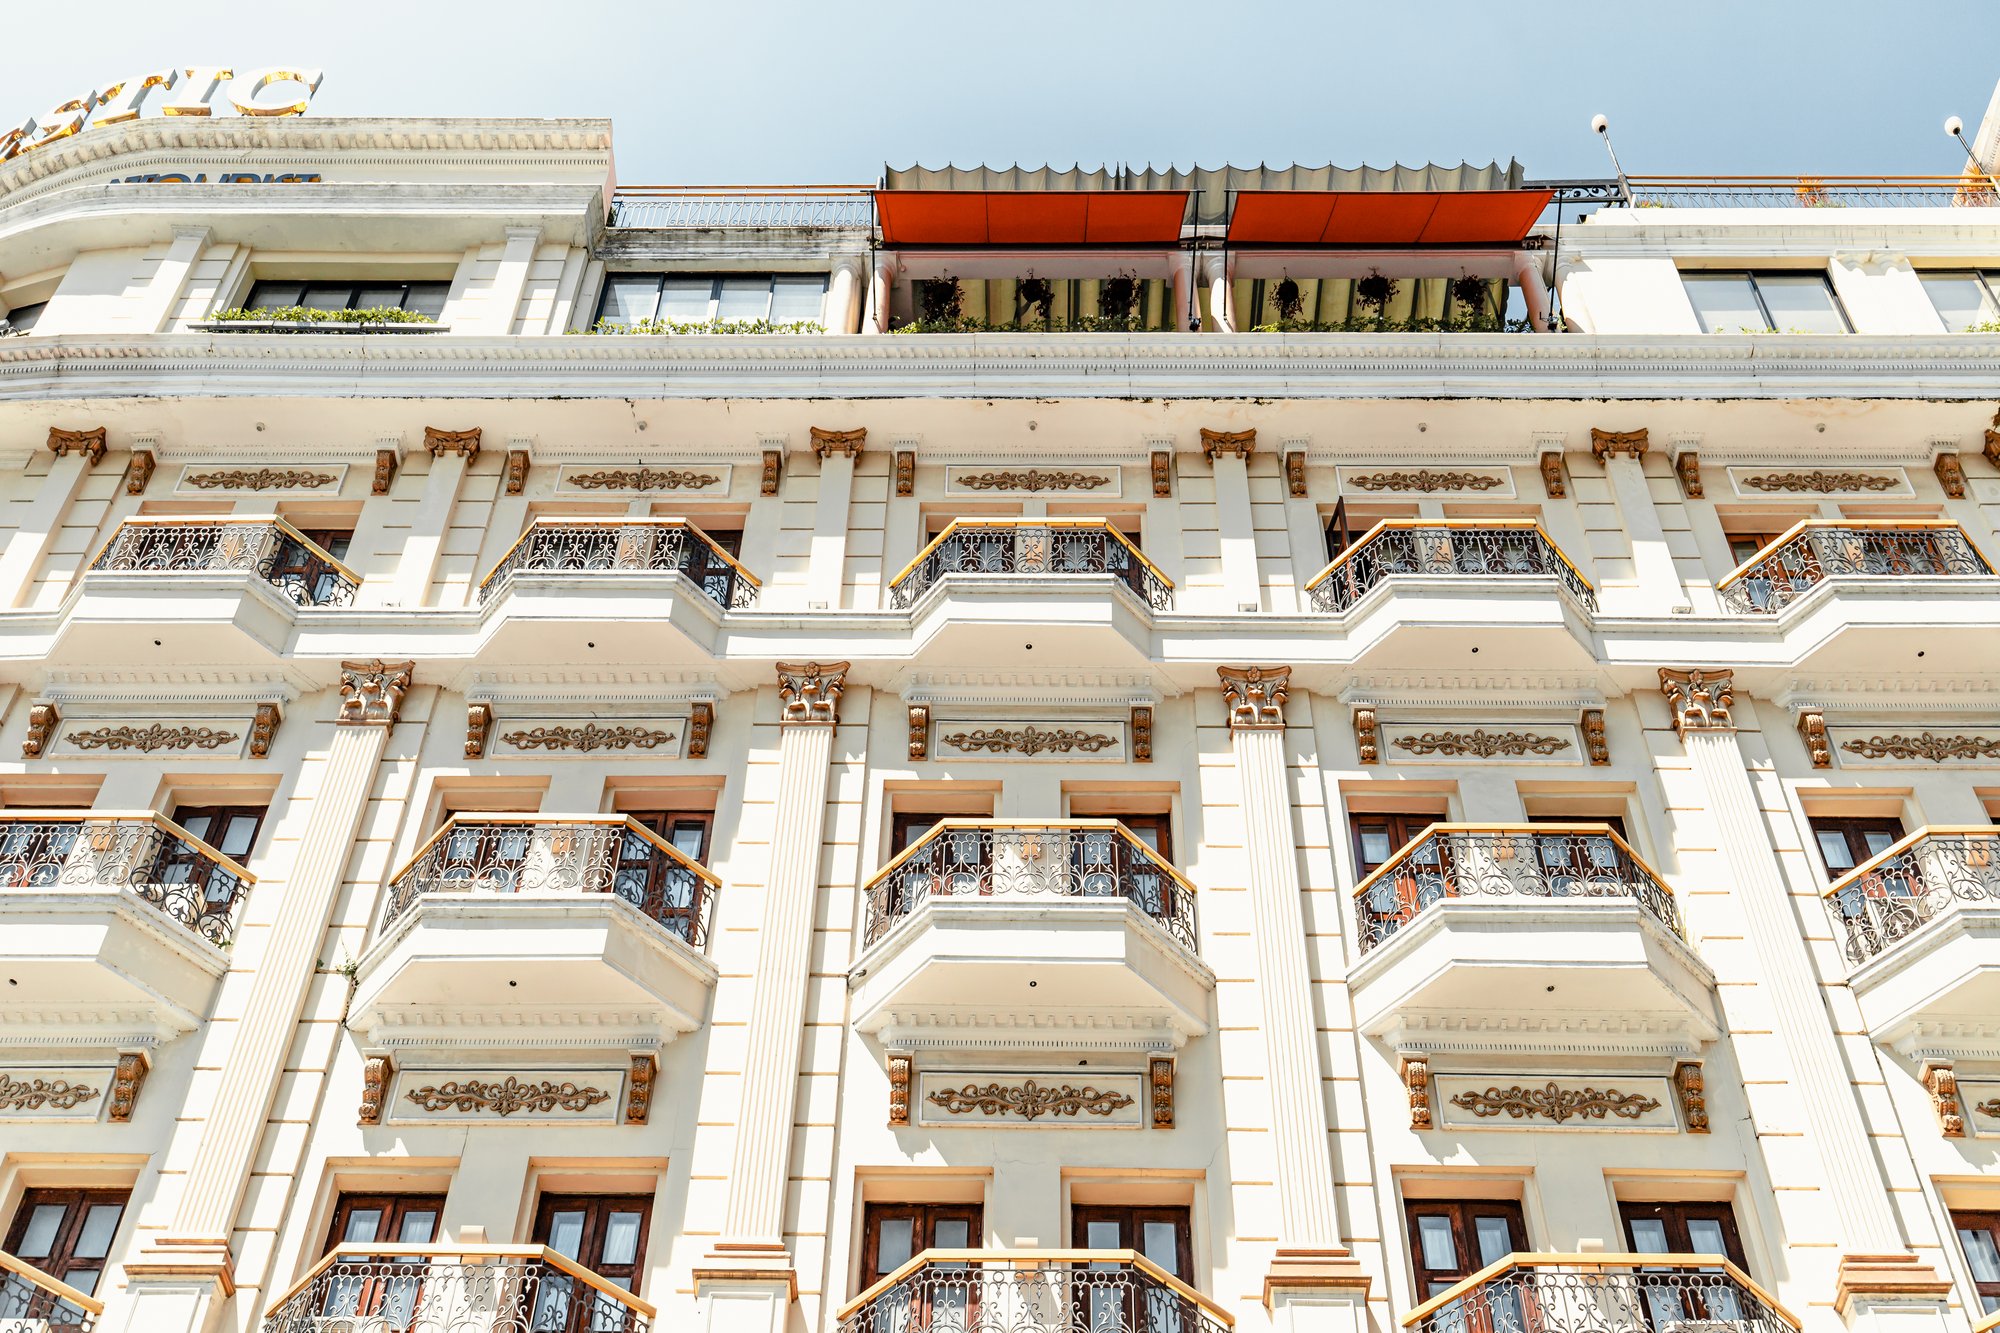 Architecture of Majestic Hotel Saigon